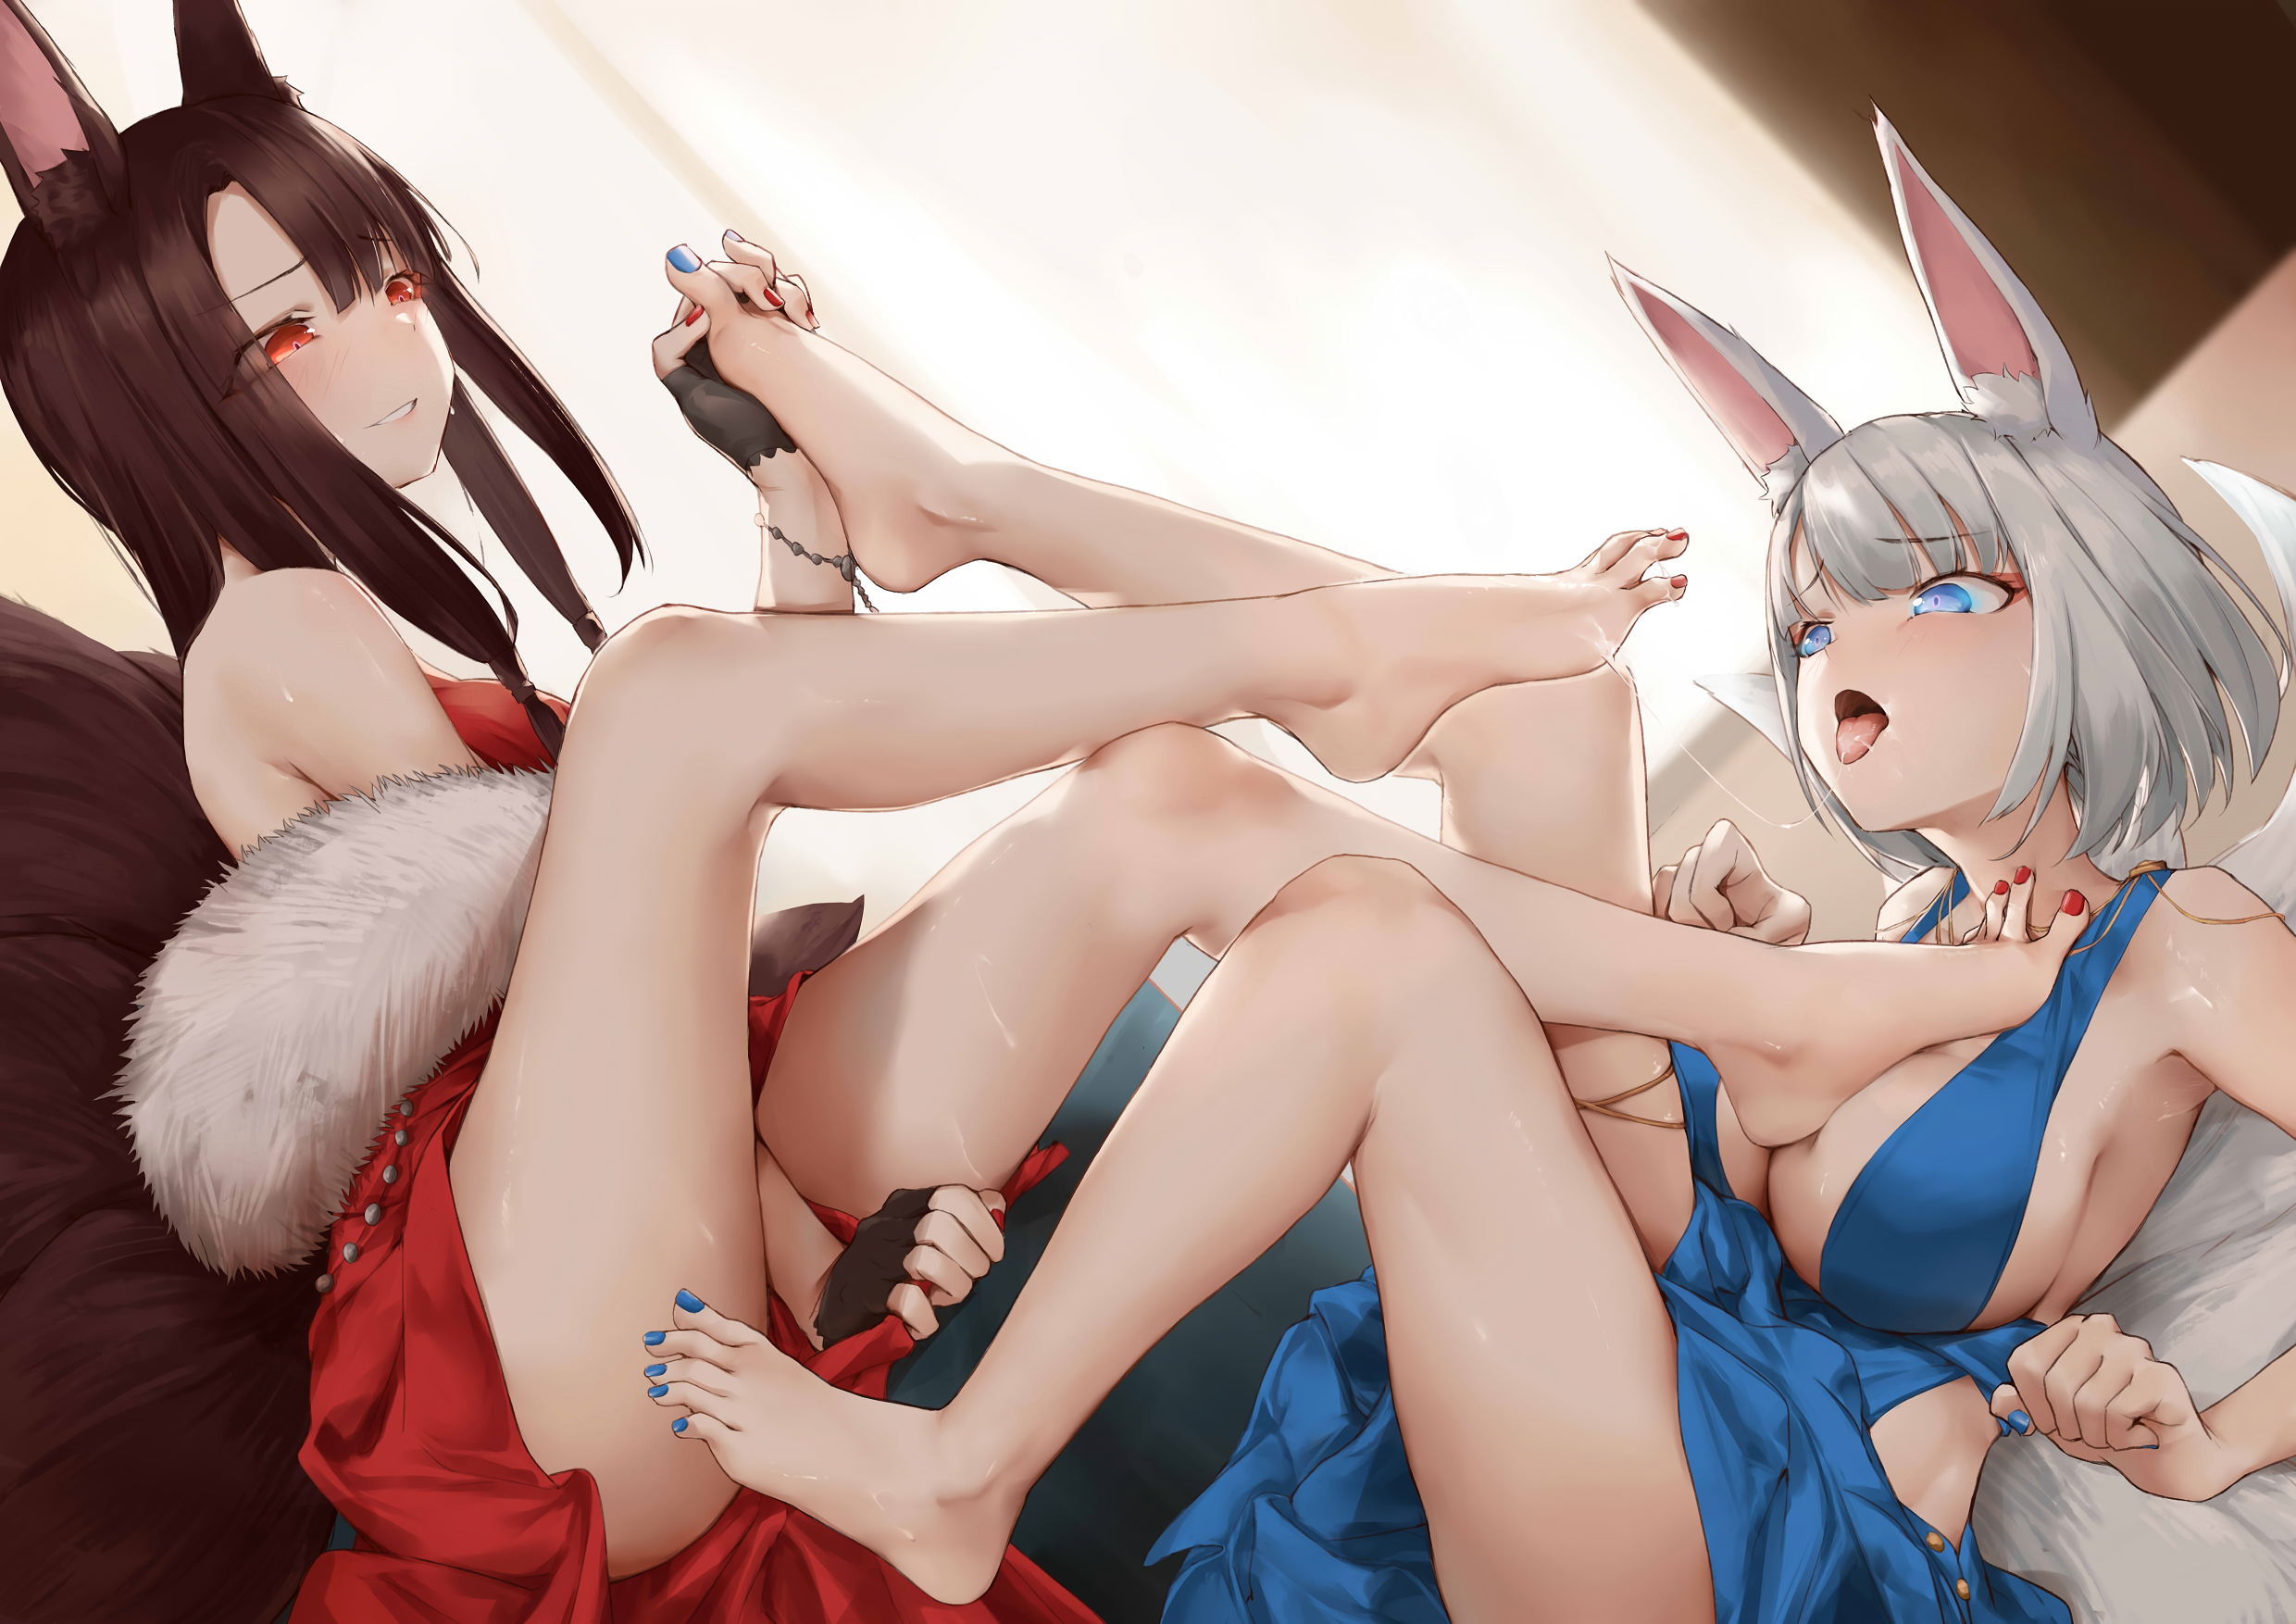 Anime 2480x1754 anime anime girls saliva saliva trail tongue out licking feet lesbians mouth fox girl